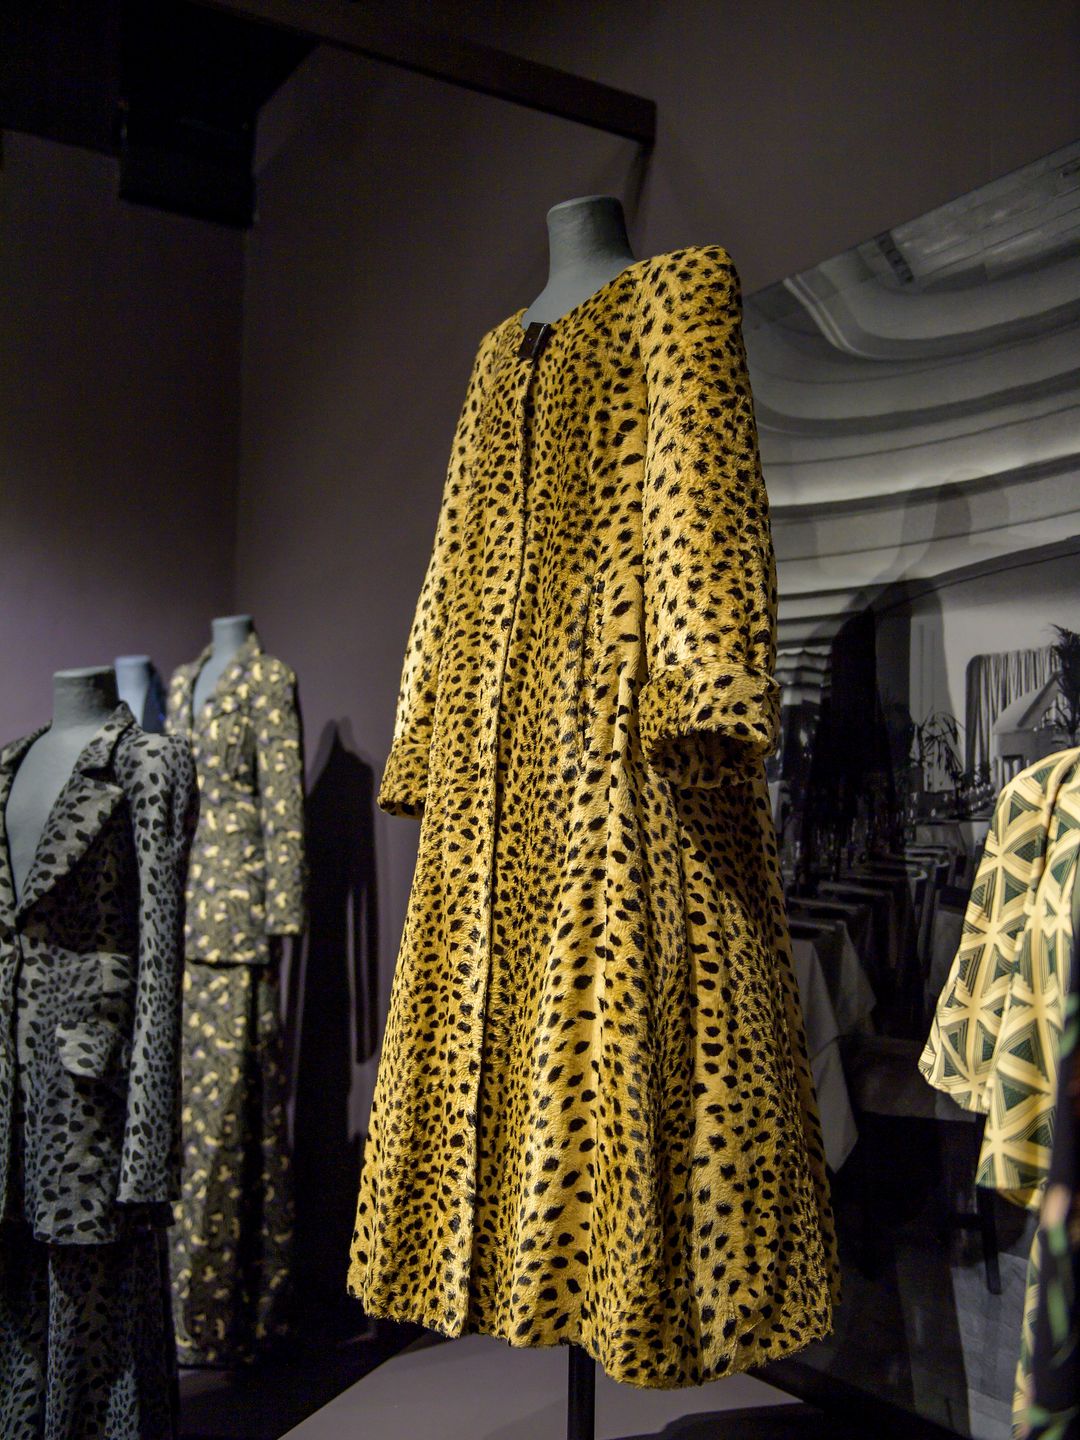 A striking leopard print coat 